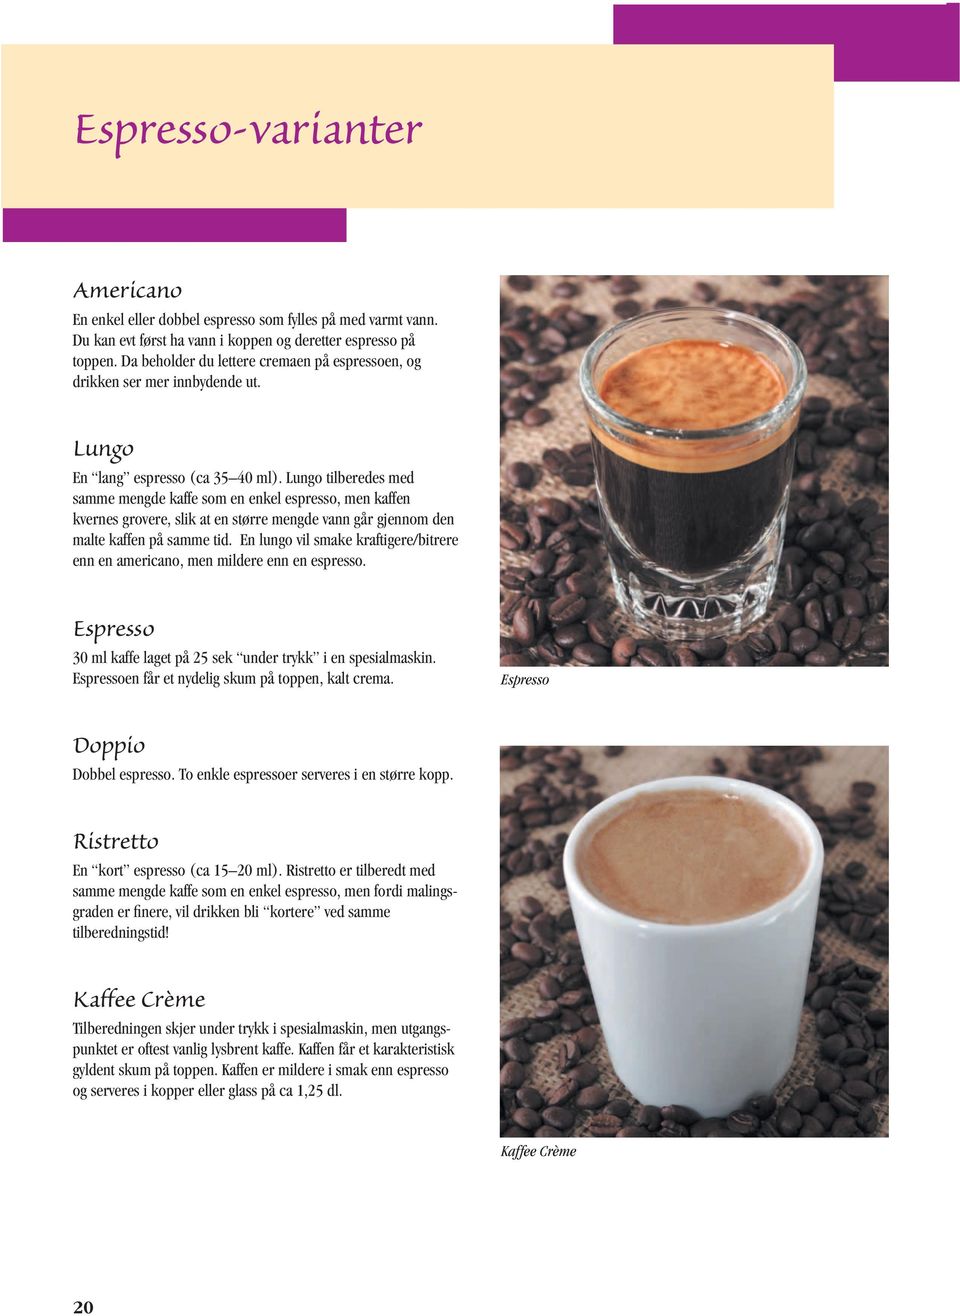 Lungo tilberedes med samme mengde kaffe som en enkel espresso, men kaffen kvernes grovere, slik at en større mengde vann går gjennom den malte kaffen på samme tid.